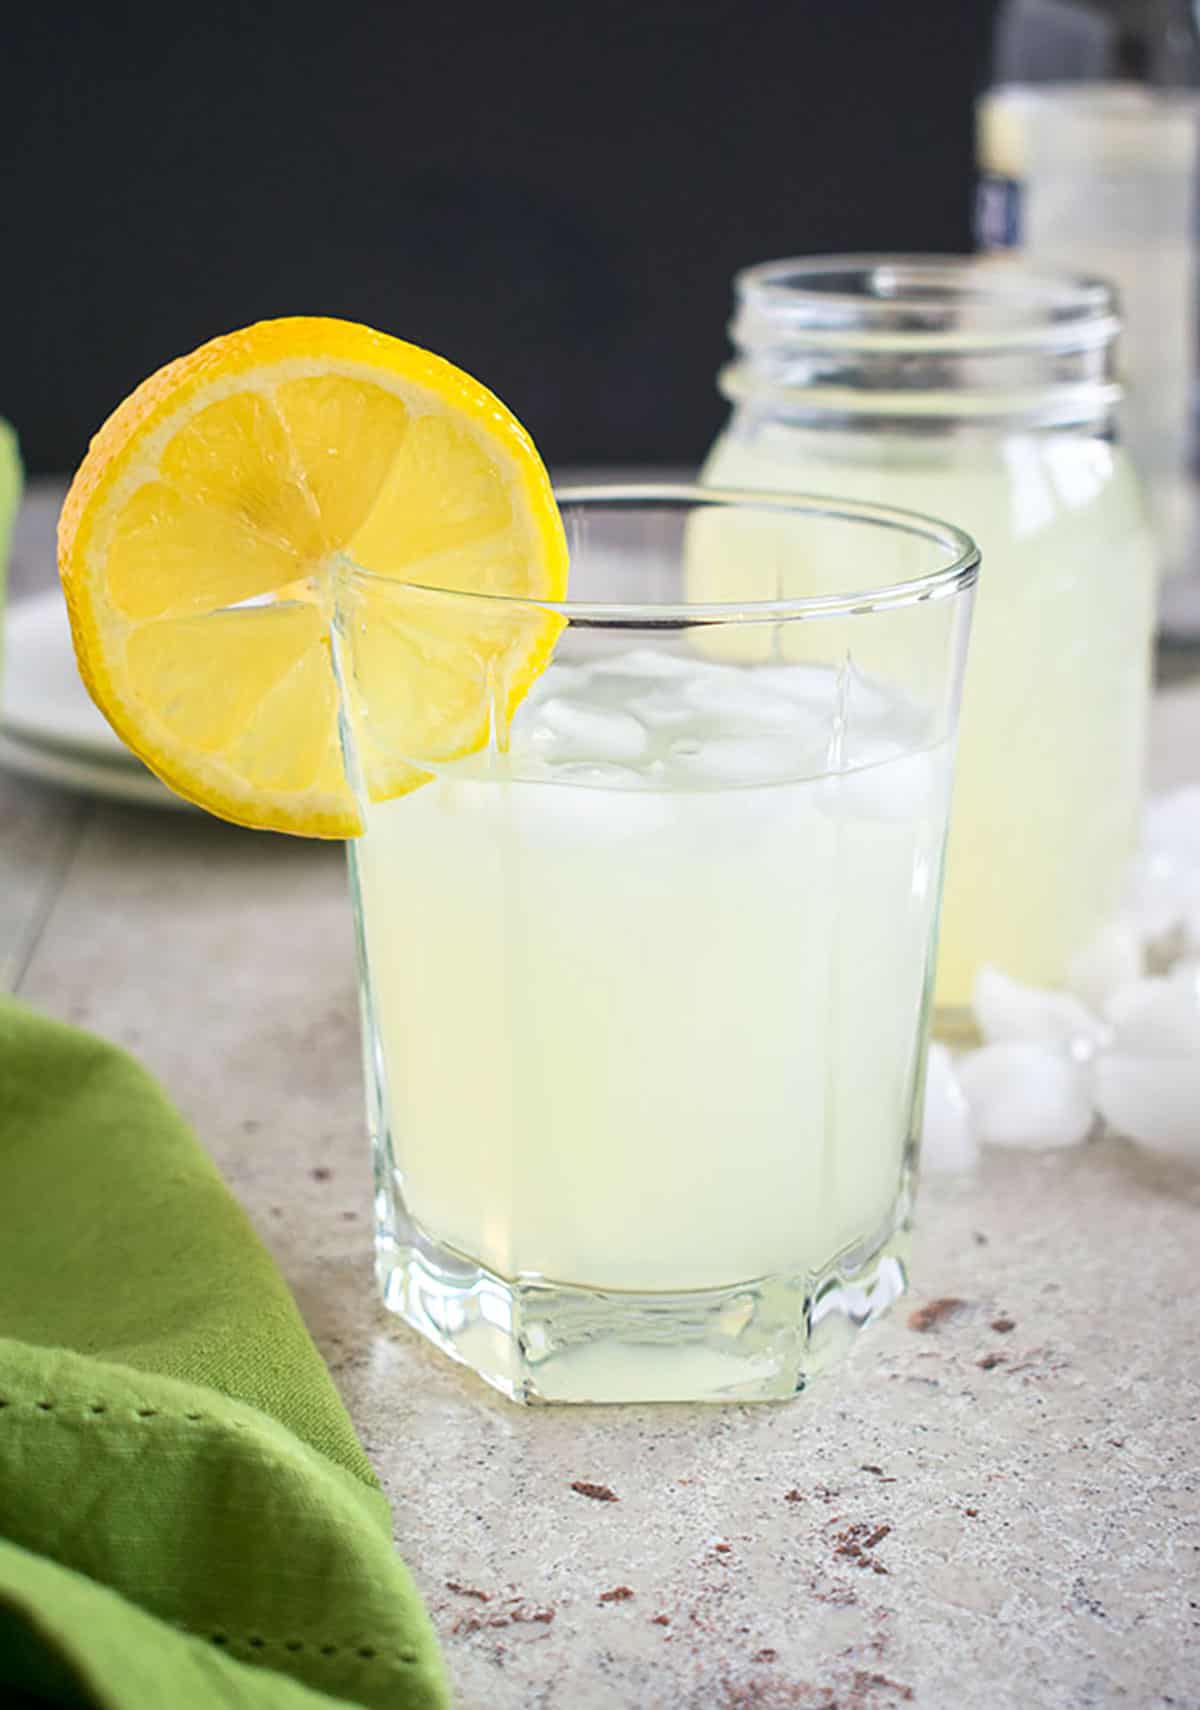 Lemonade Moonshine - It's so easy to make this refreshing drink! #moonshine #lemonade #lemonademoonshine #cocktails #drinks #lemon #homemademoonshine